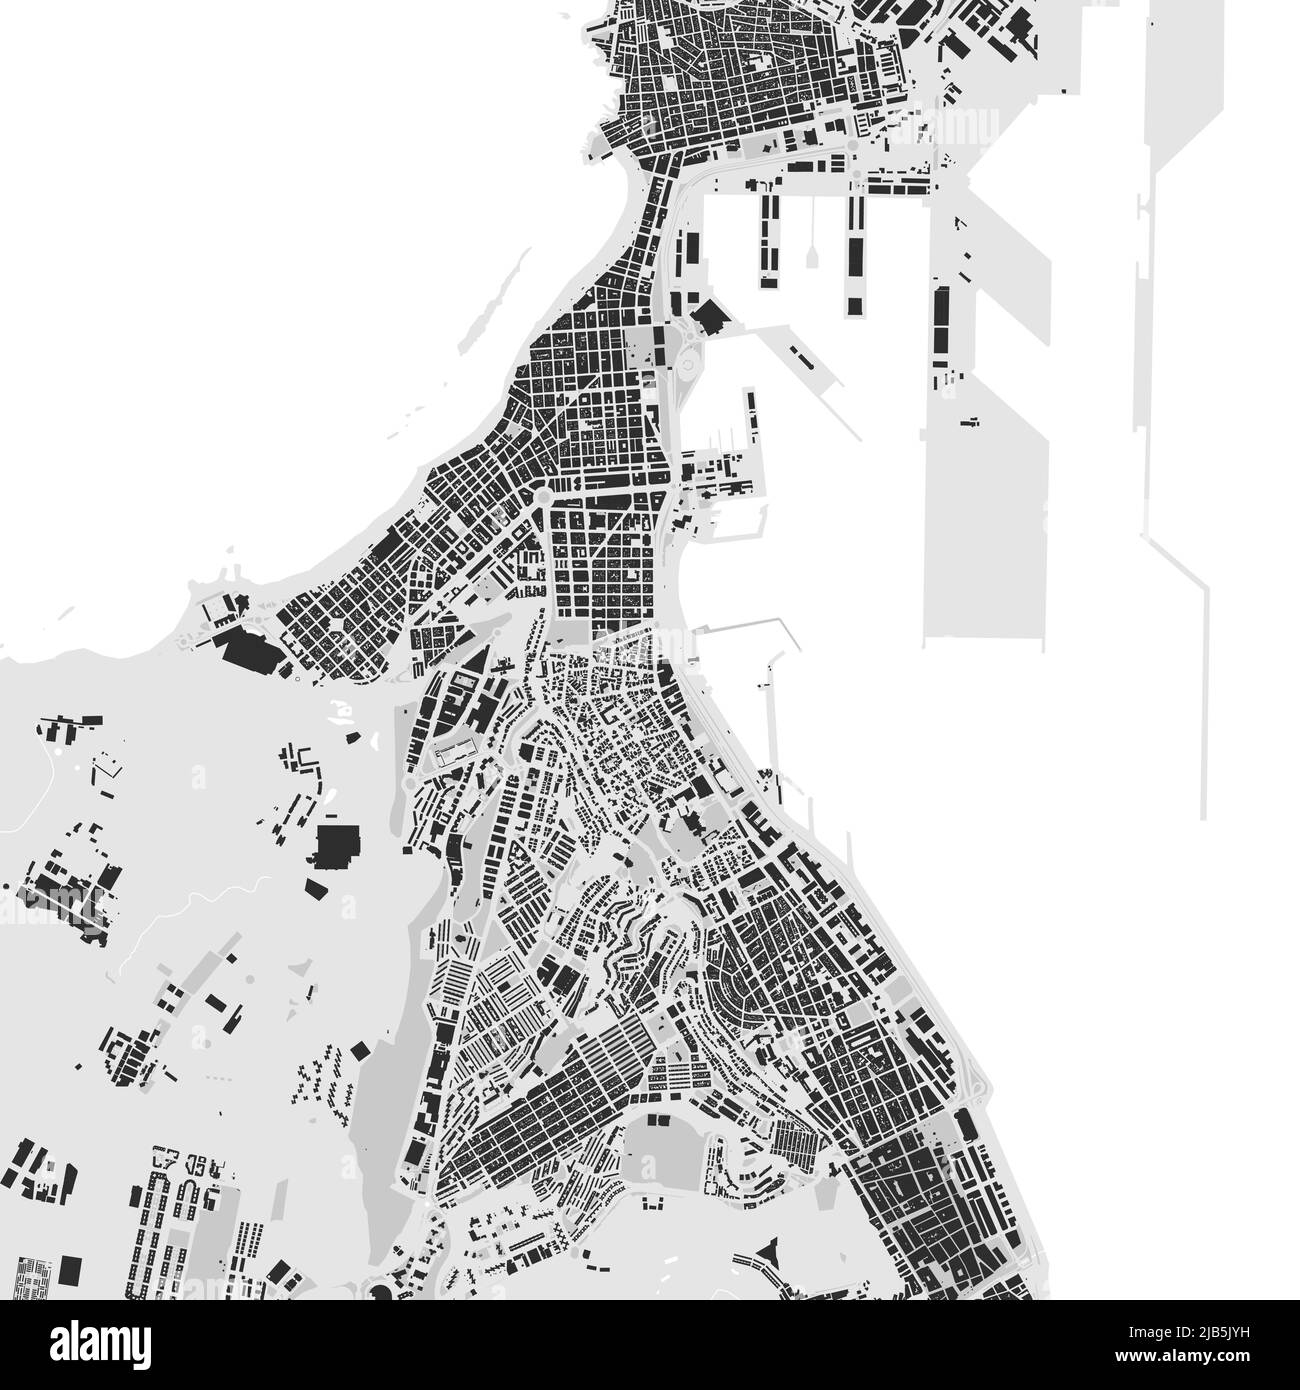 Stadtplan von Las Palmas de Gran Canaria. Vektorgrafik, Las Palmas Karte Graustufen Kunstposter. Straßenkarte mit Straßen, Metropolstadt Stock Vektor